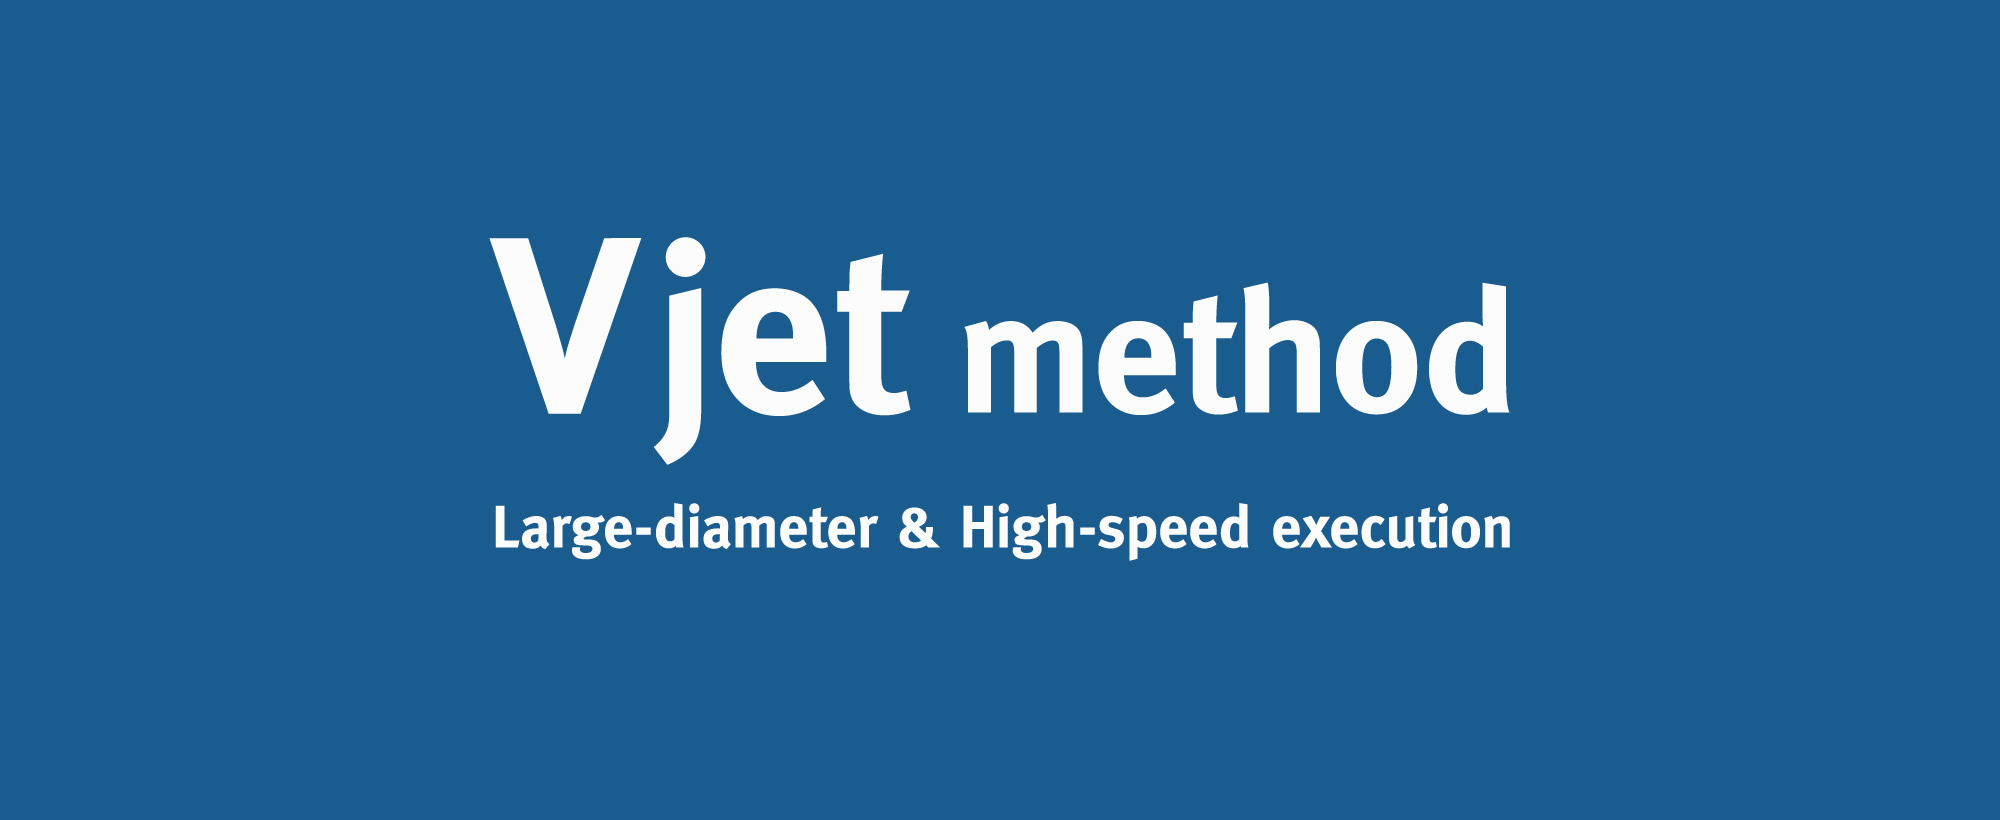 Vjet Method Large-diameter and High-Speed Ecxecution